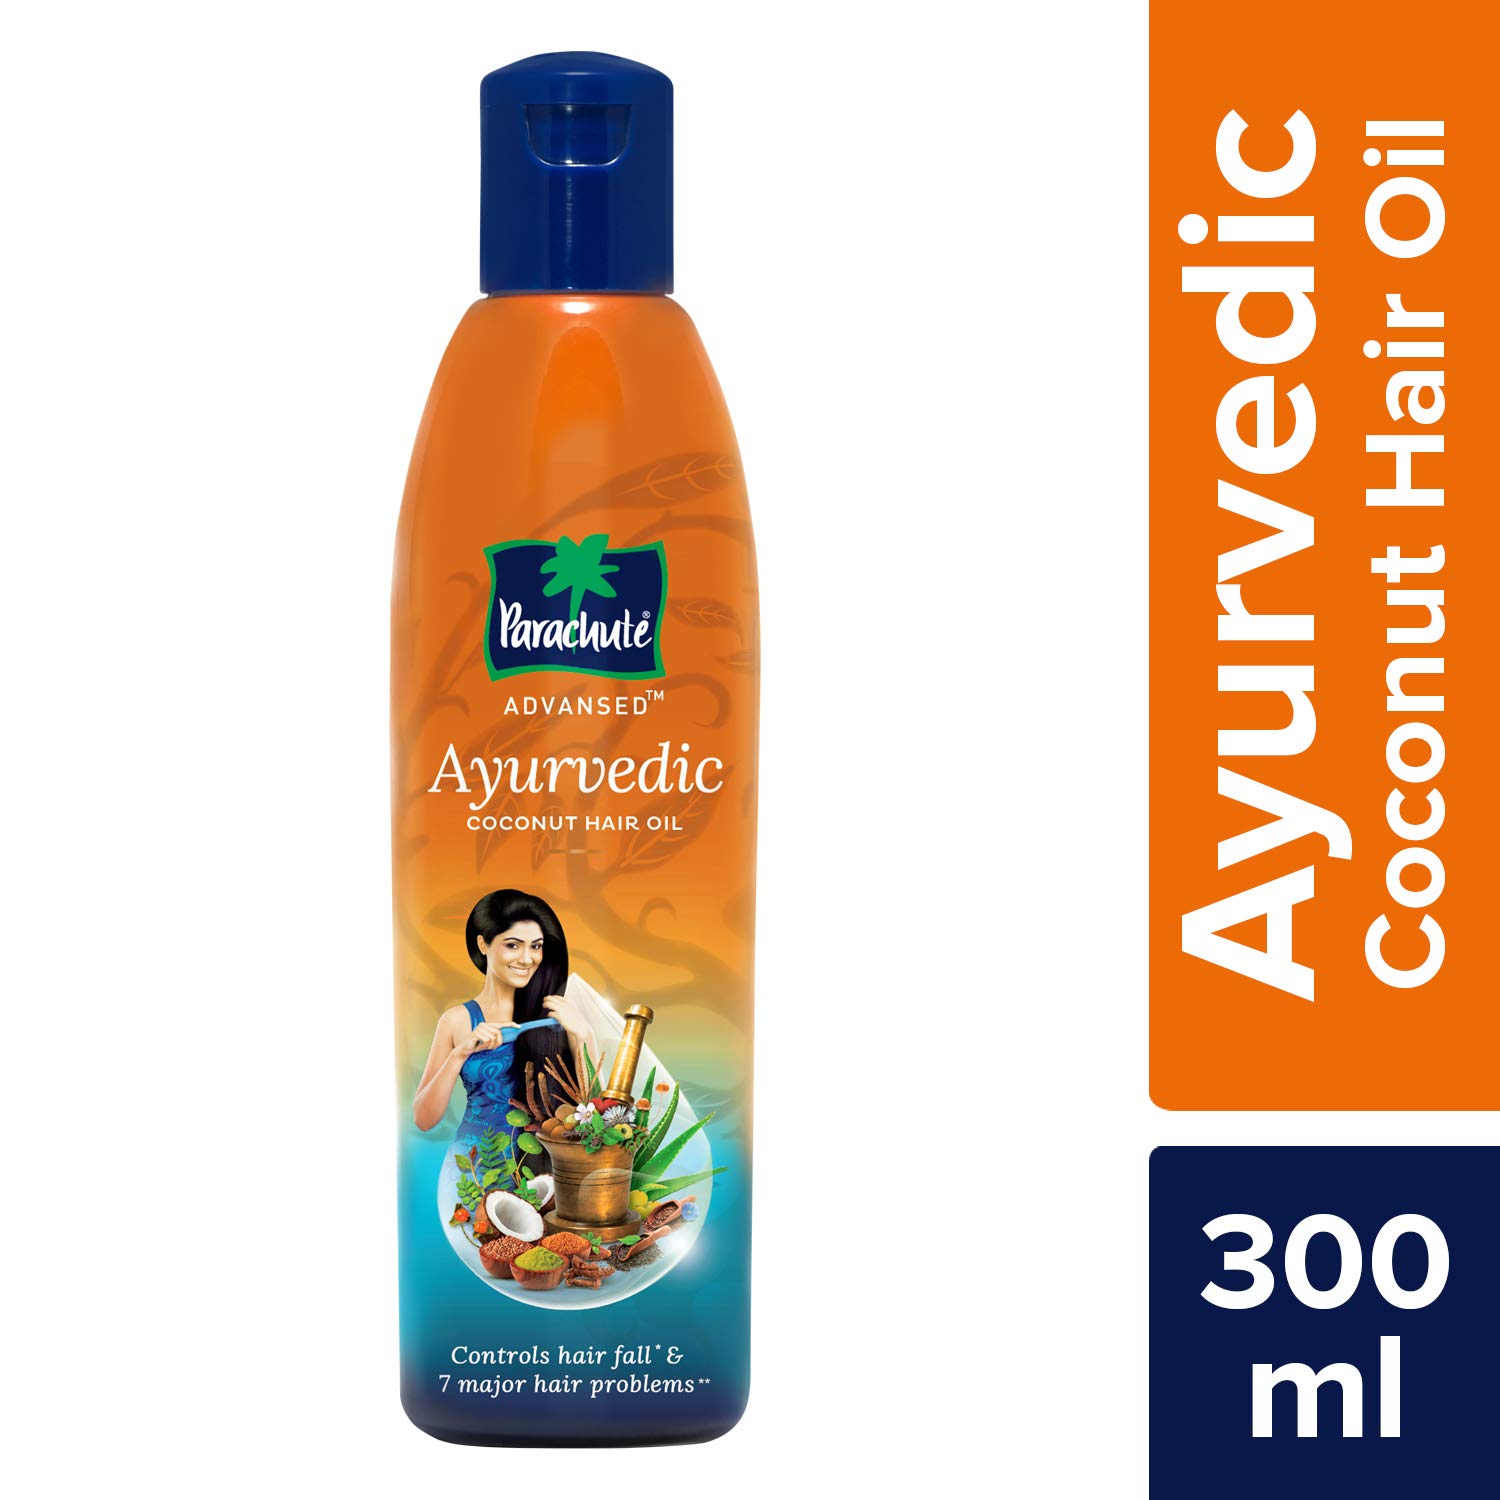 Parachute Advansed Ayurvedic Coconut Hair Oil- 300 ml – 